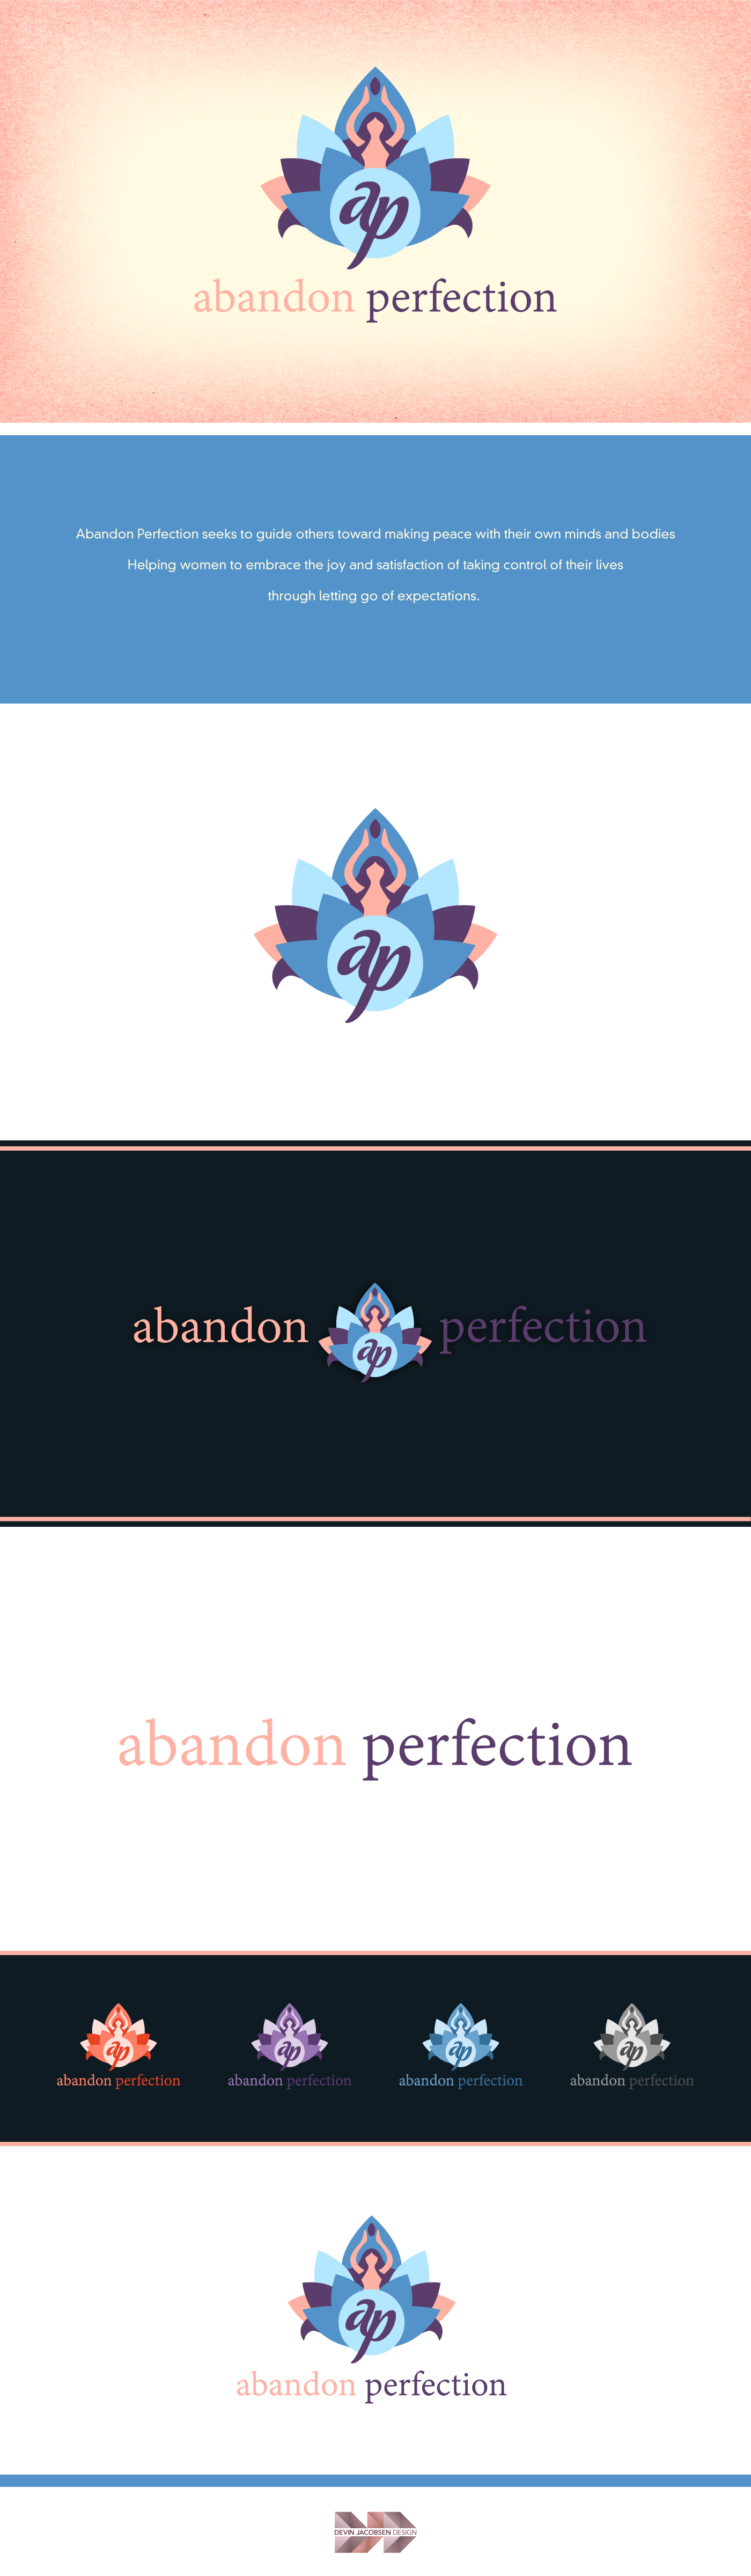 Extremely yonic logo for Abandon Perfection life coaching service.